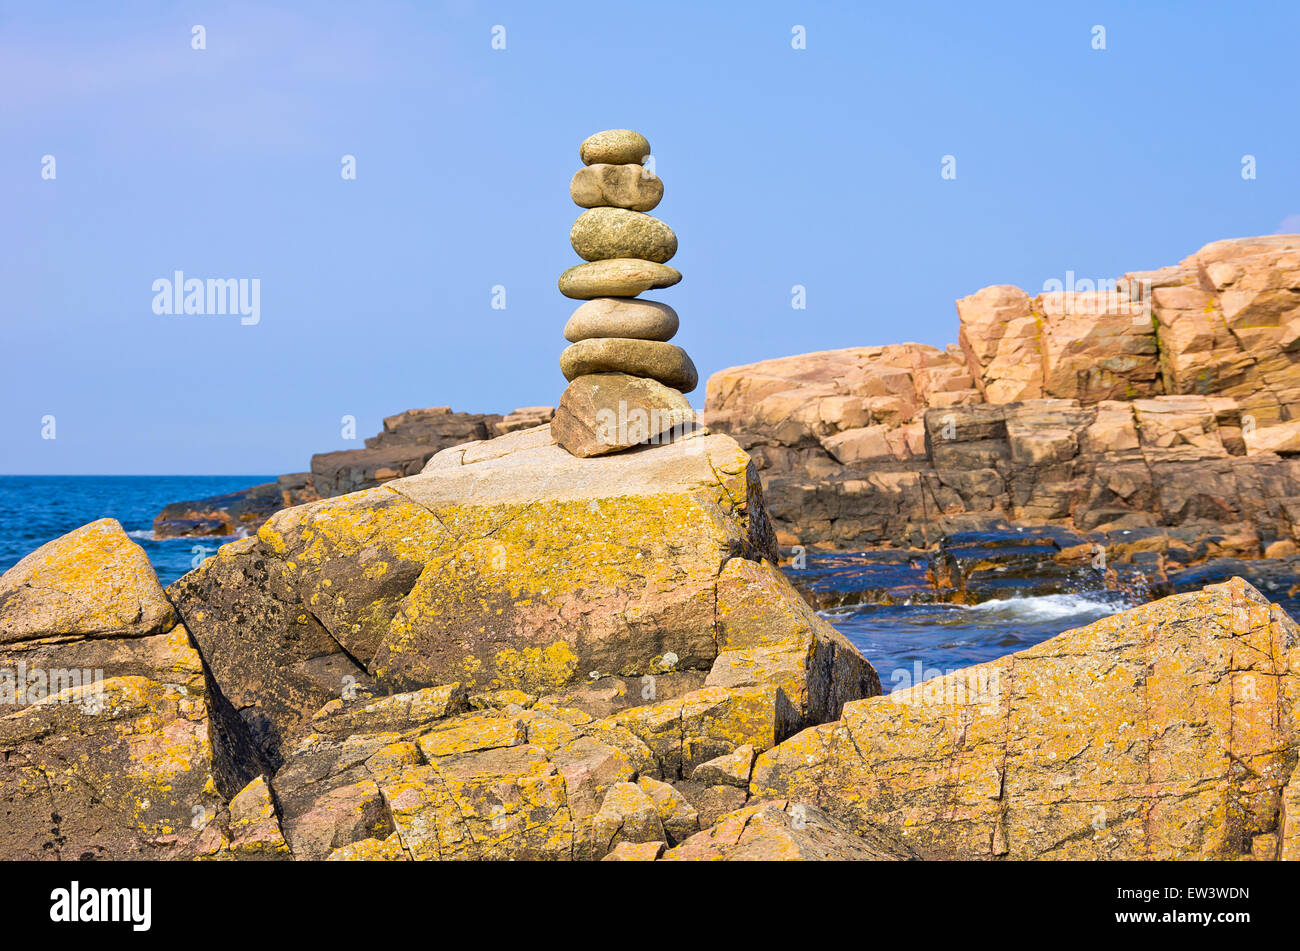 Balancing pebbles, rocky coast and Baltic Sea at Hovs Hallar, Sweden. Stock Photo